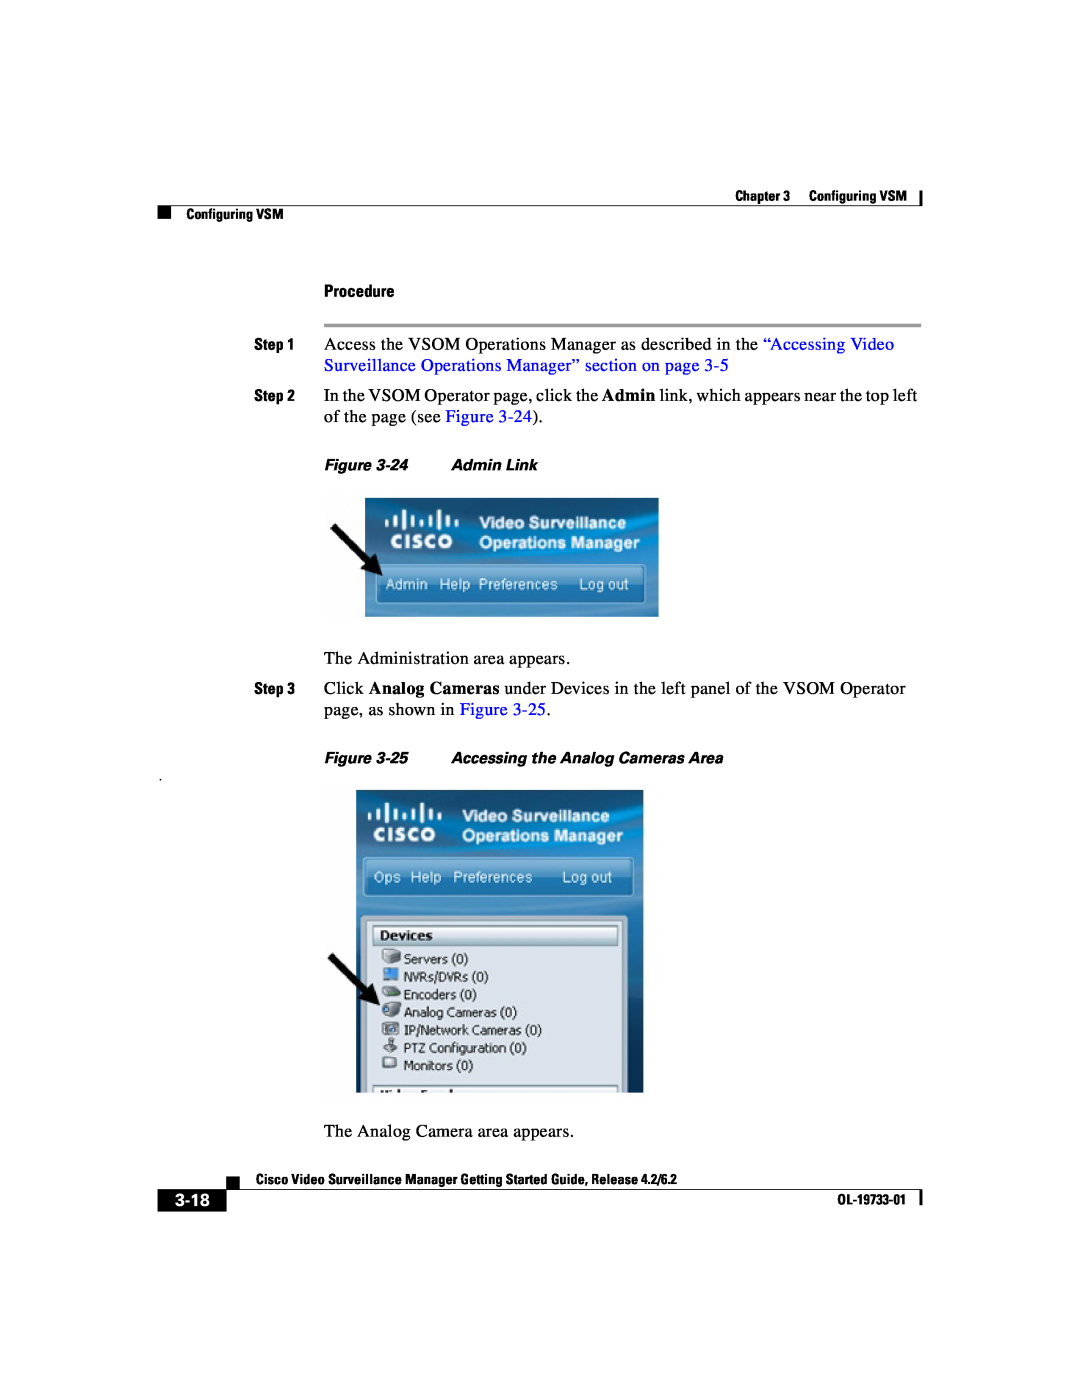 Cisco Systems Release 4.2 manual Procedure, 3-18 